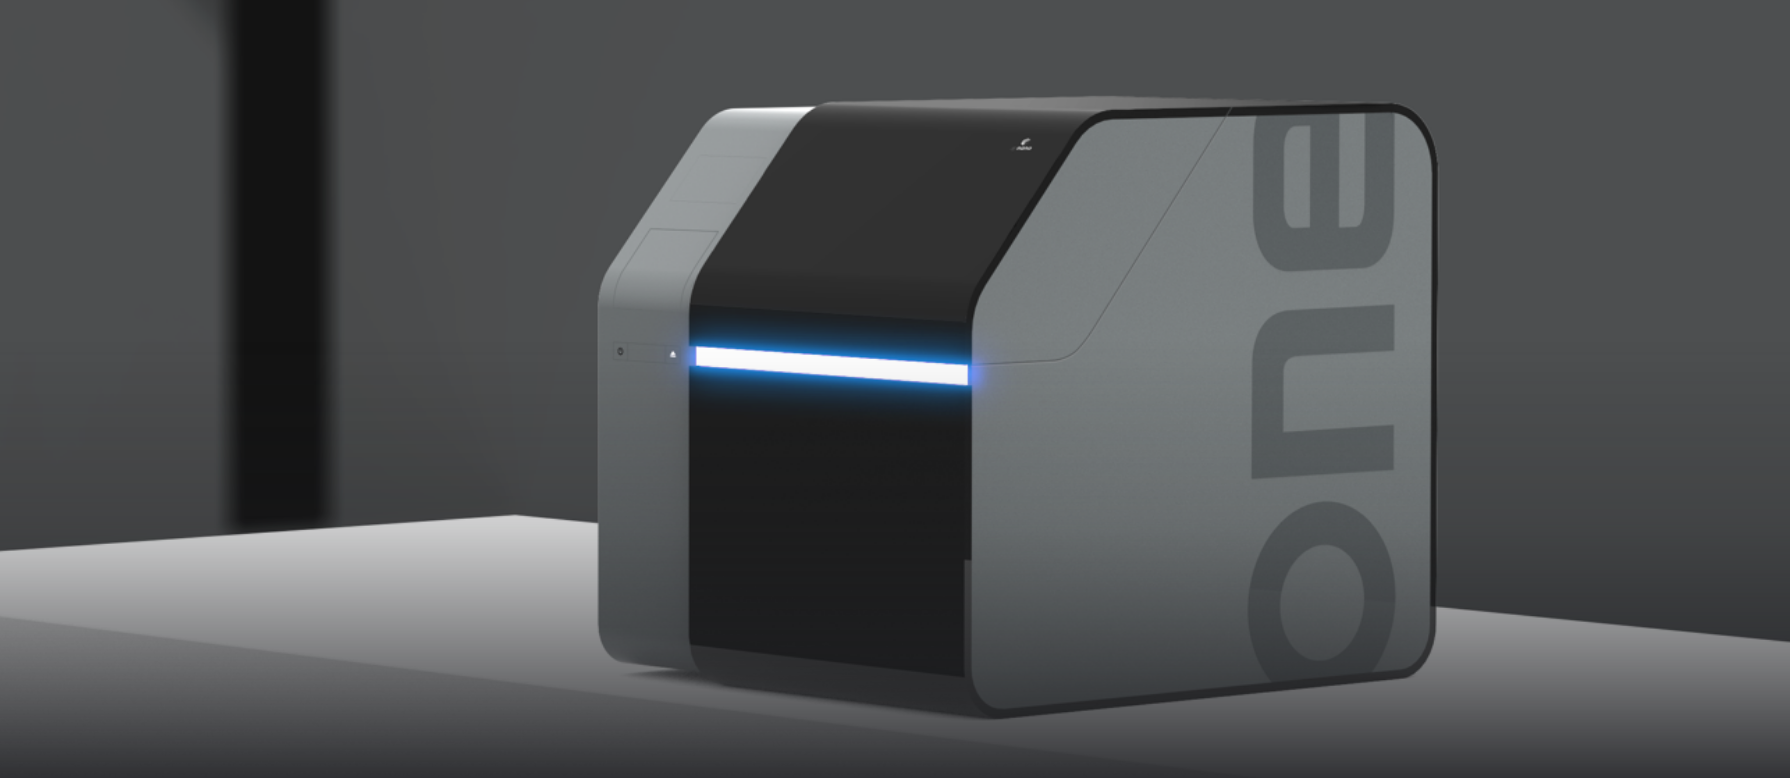 NanoOne printer 